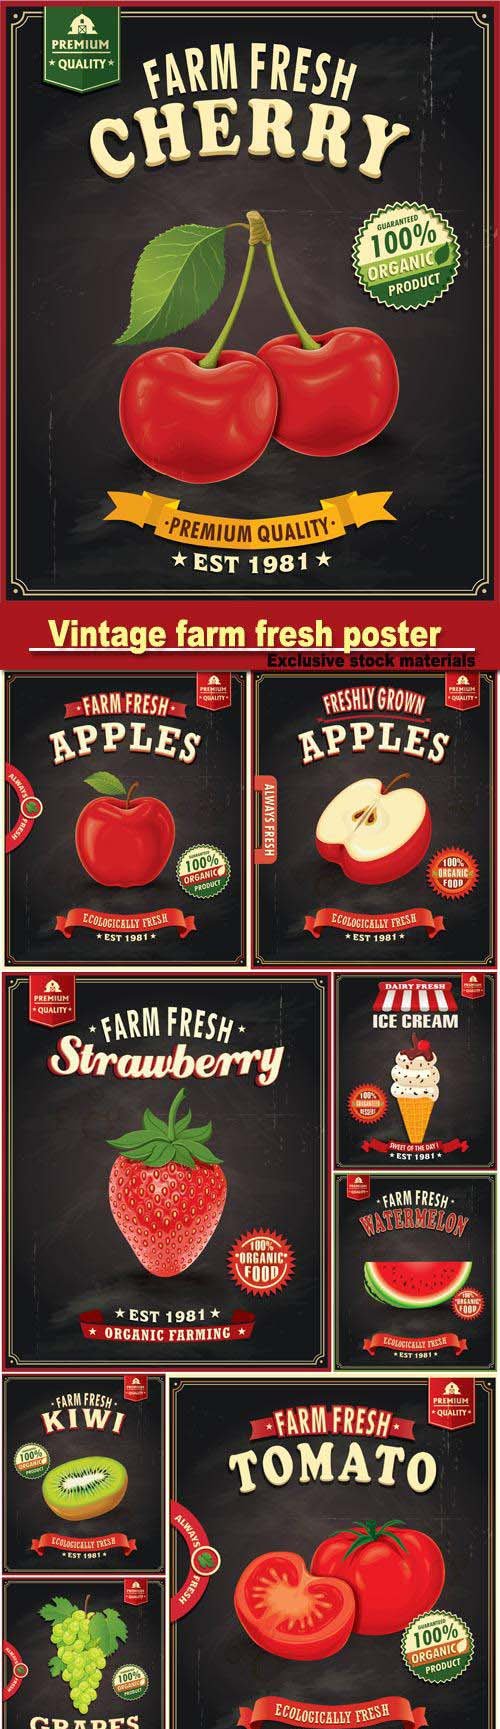 Vintage farm fresh poster design